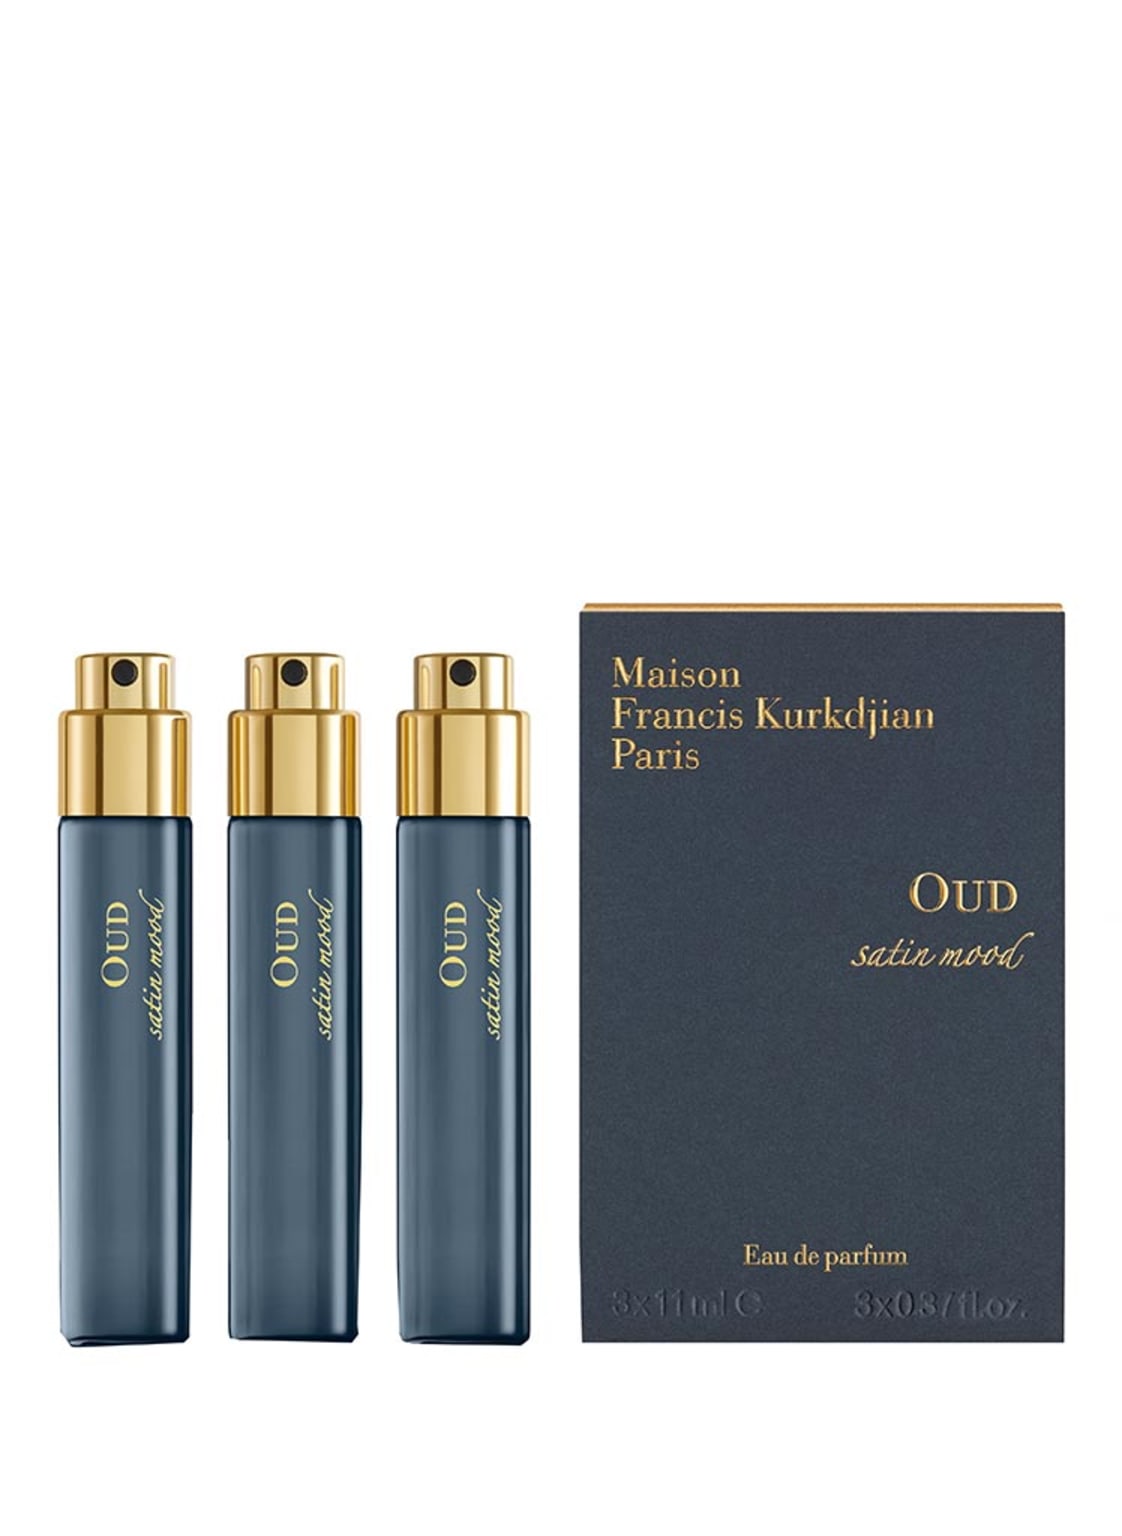 Maison Francis Kurkdjian Paris Oud Satin Mood Eau de Parfum (3 x 11ml) 33 ml von Maison Francis Kurkdjian Paris